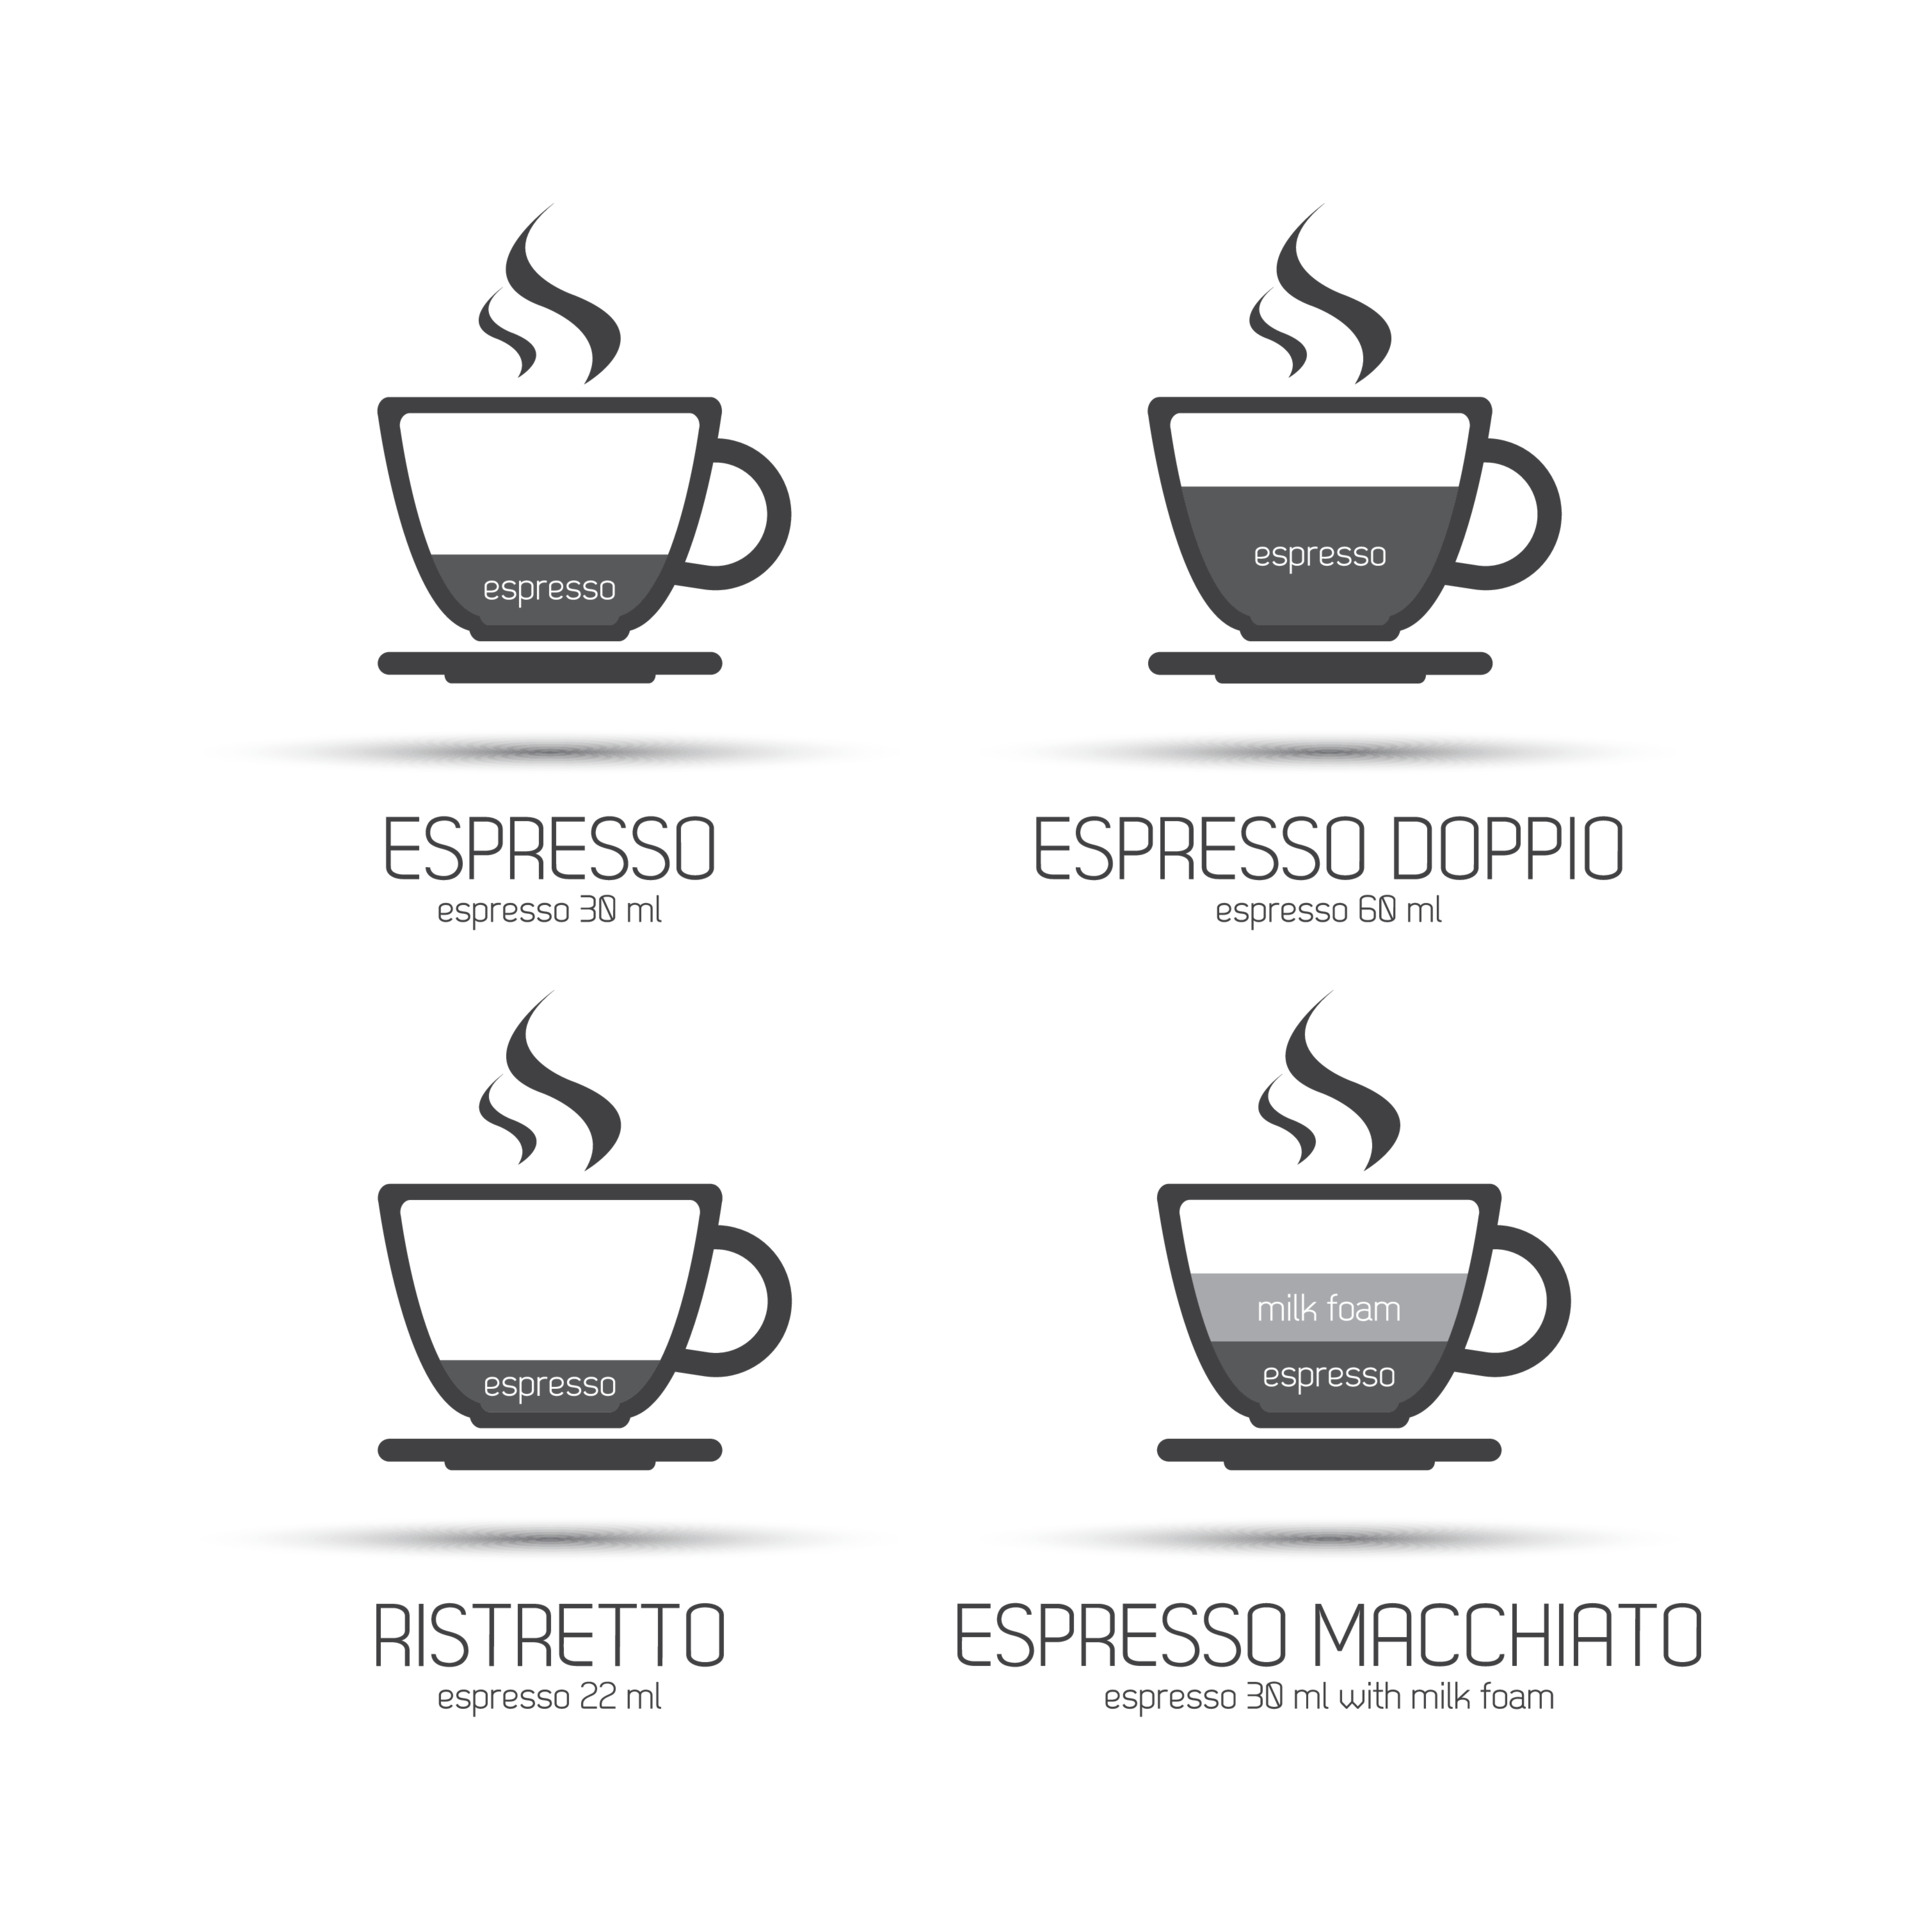 https://static.vecteezy.com/system/resources/previews/003/478/407/original/set-of-coffee-cups-type-of-coffee-espresso-dopio-ristretto-macchiato-vector.jpg